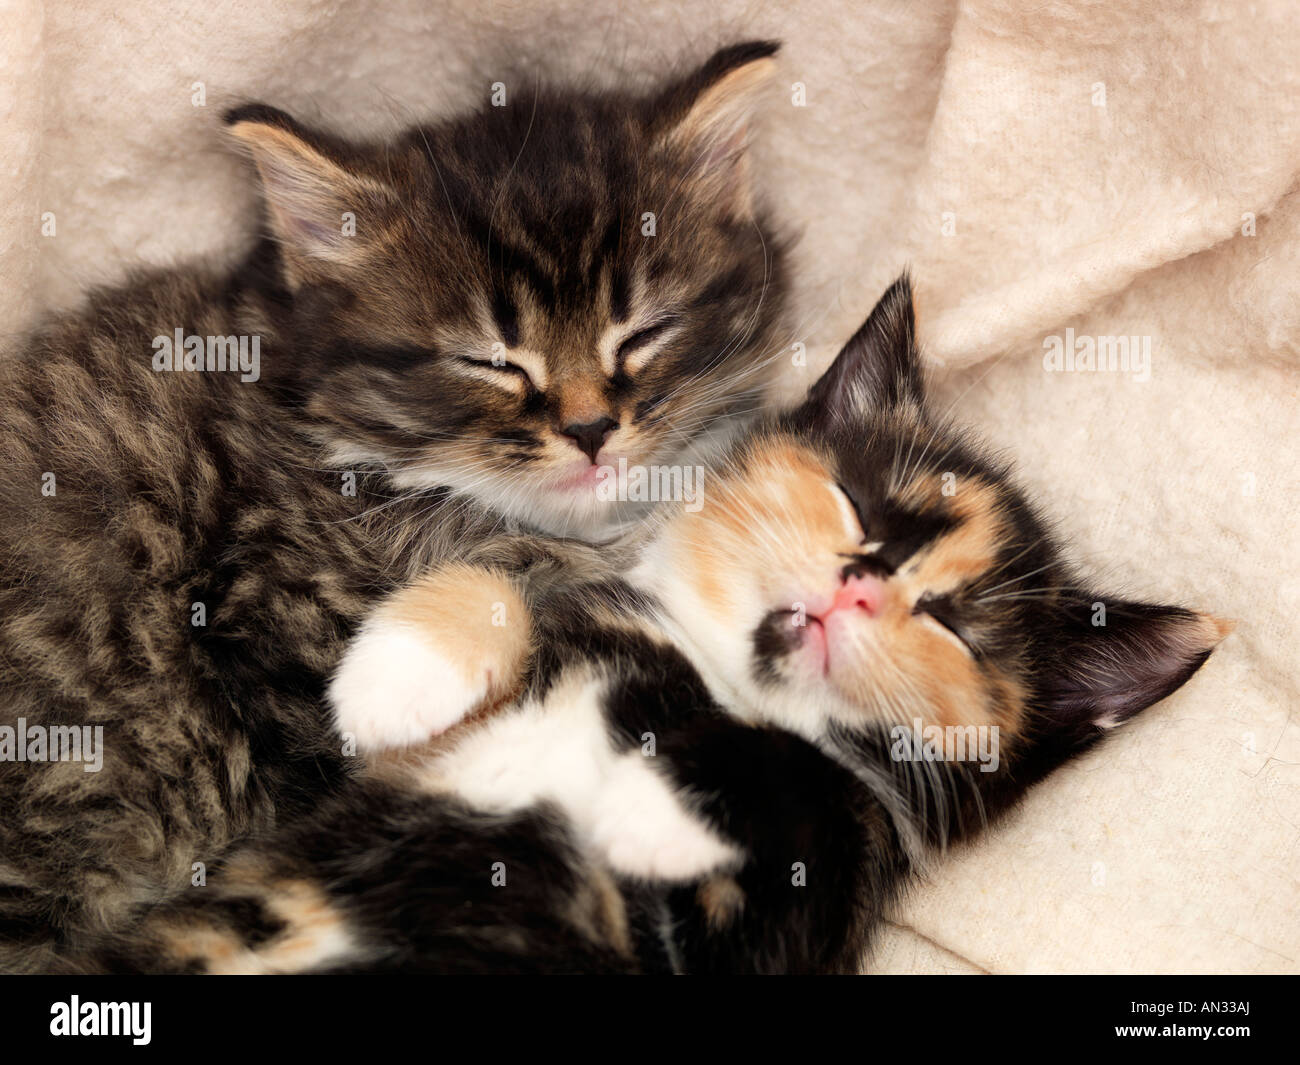 Two Sleeping Kittens 3 Weeks Old Stock Photo